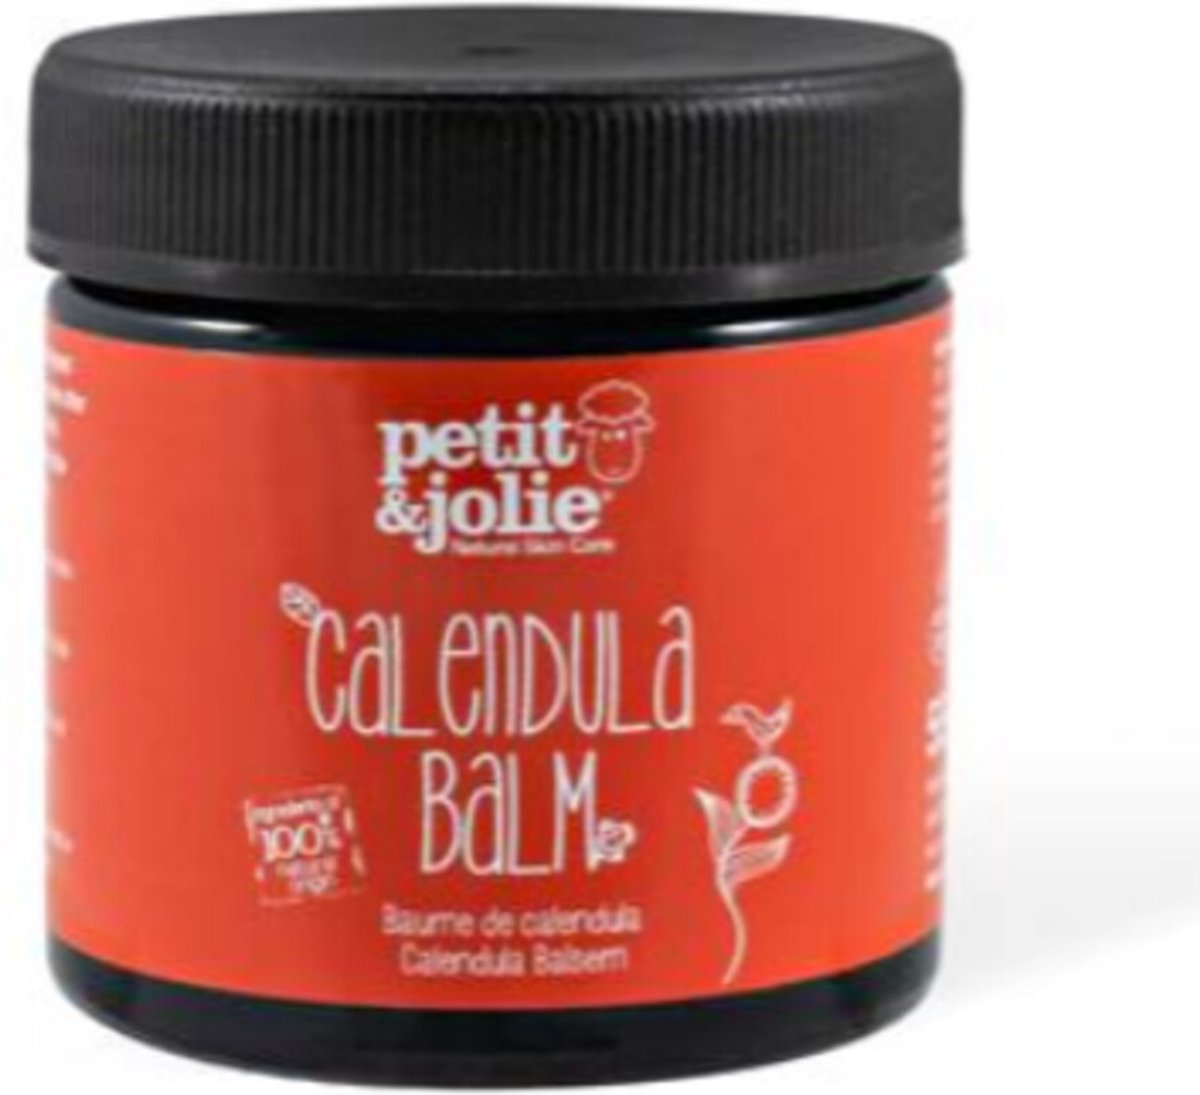 Petit&Jolie Calendula Balsem - Herstelt de huid - Natuurlijke huidverzorging - 55ml